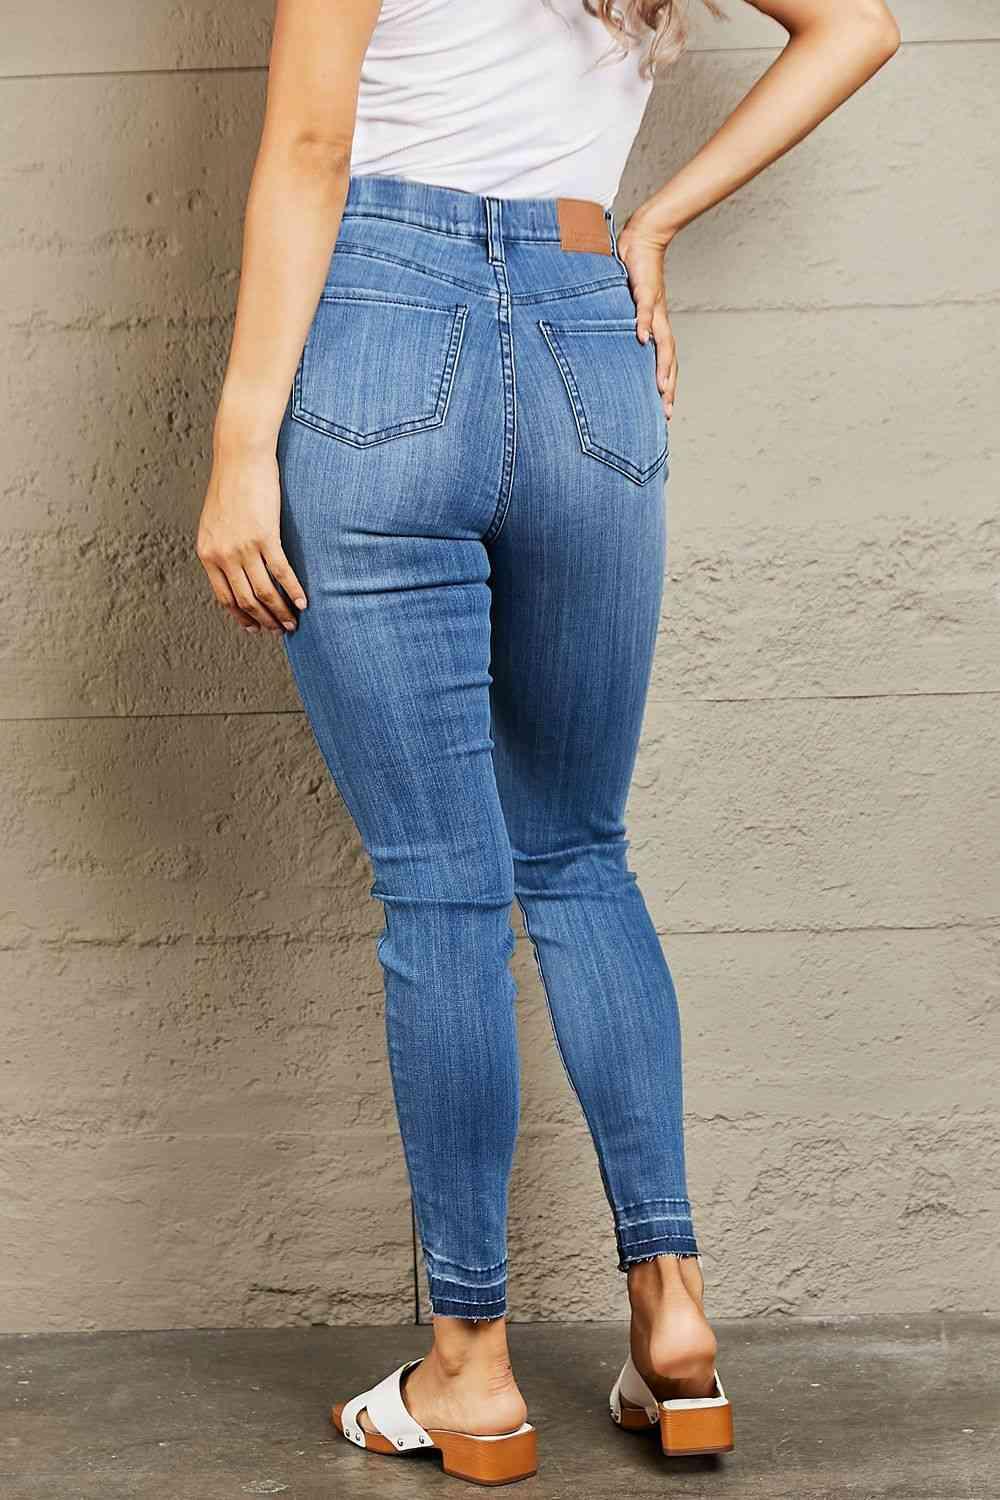 Bona Fide Fashion - Full Size High Waisted Pull On Skinny Jeans - Women Fashion - Bona Fide Fashion